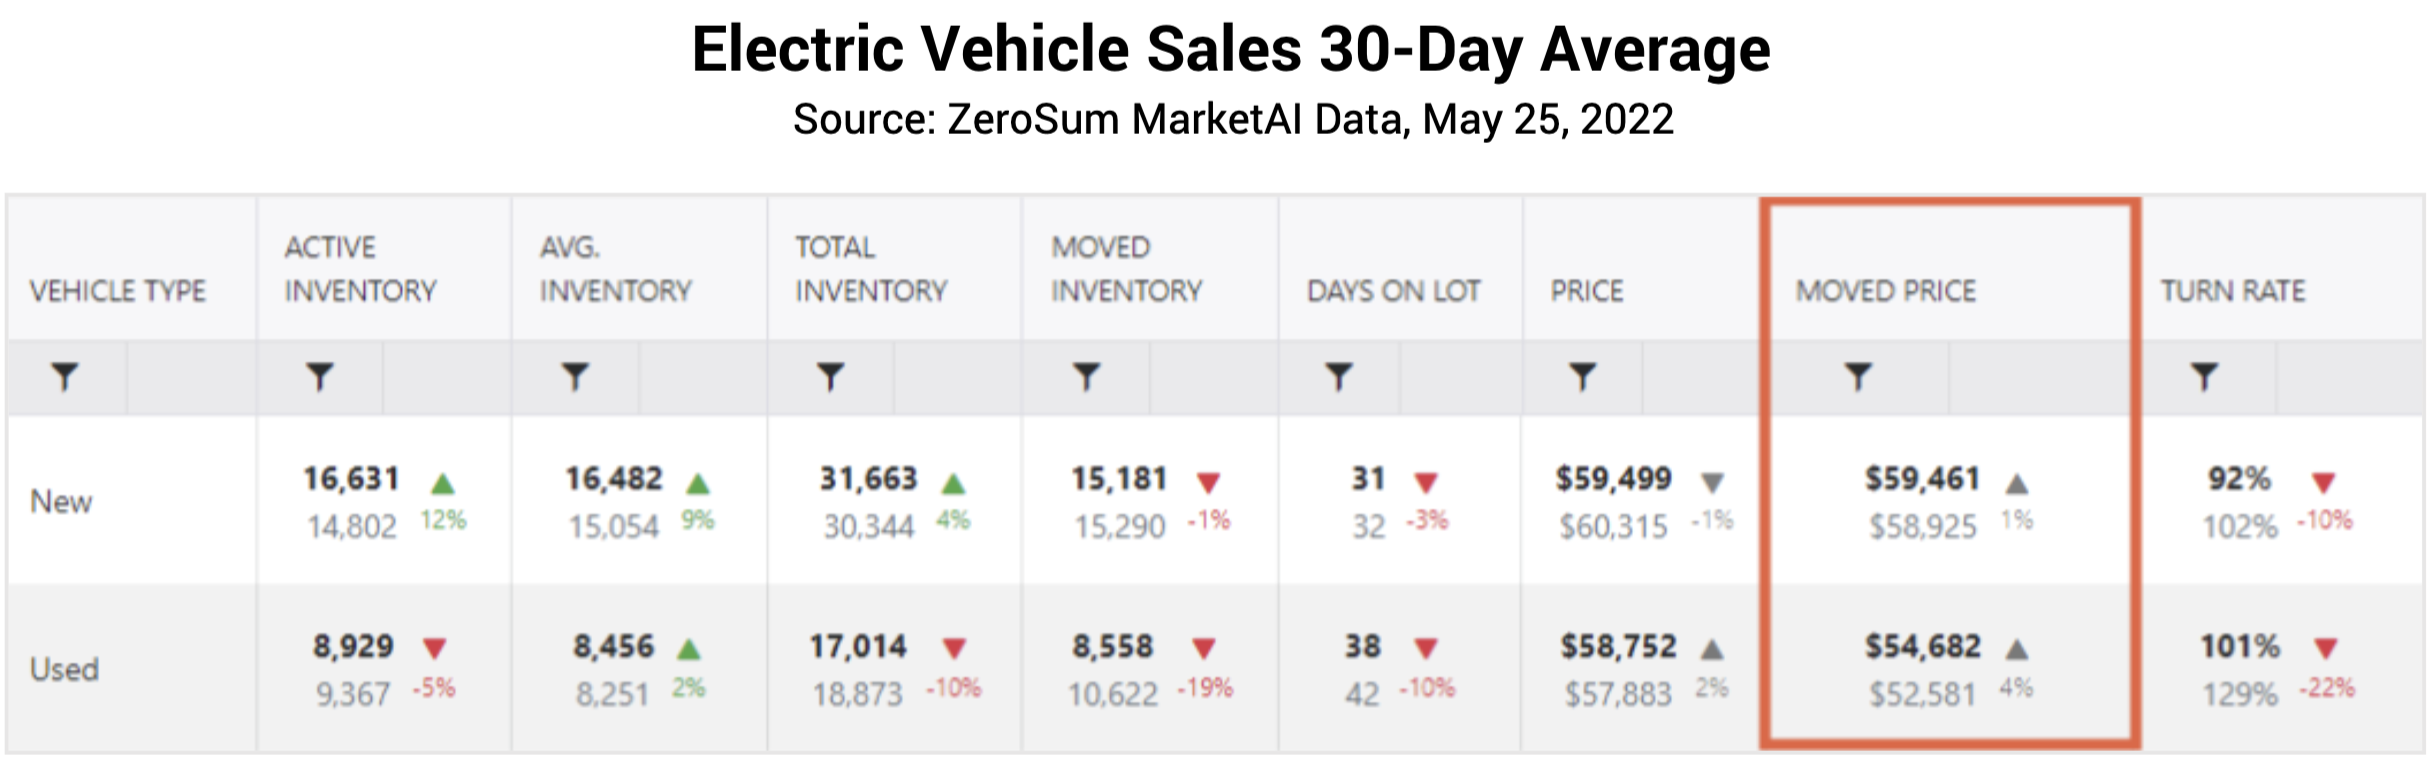 NEW EV Sales Data